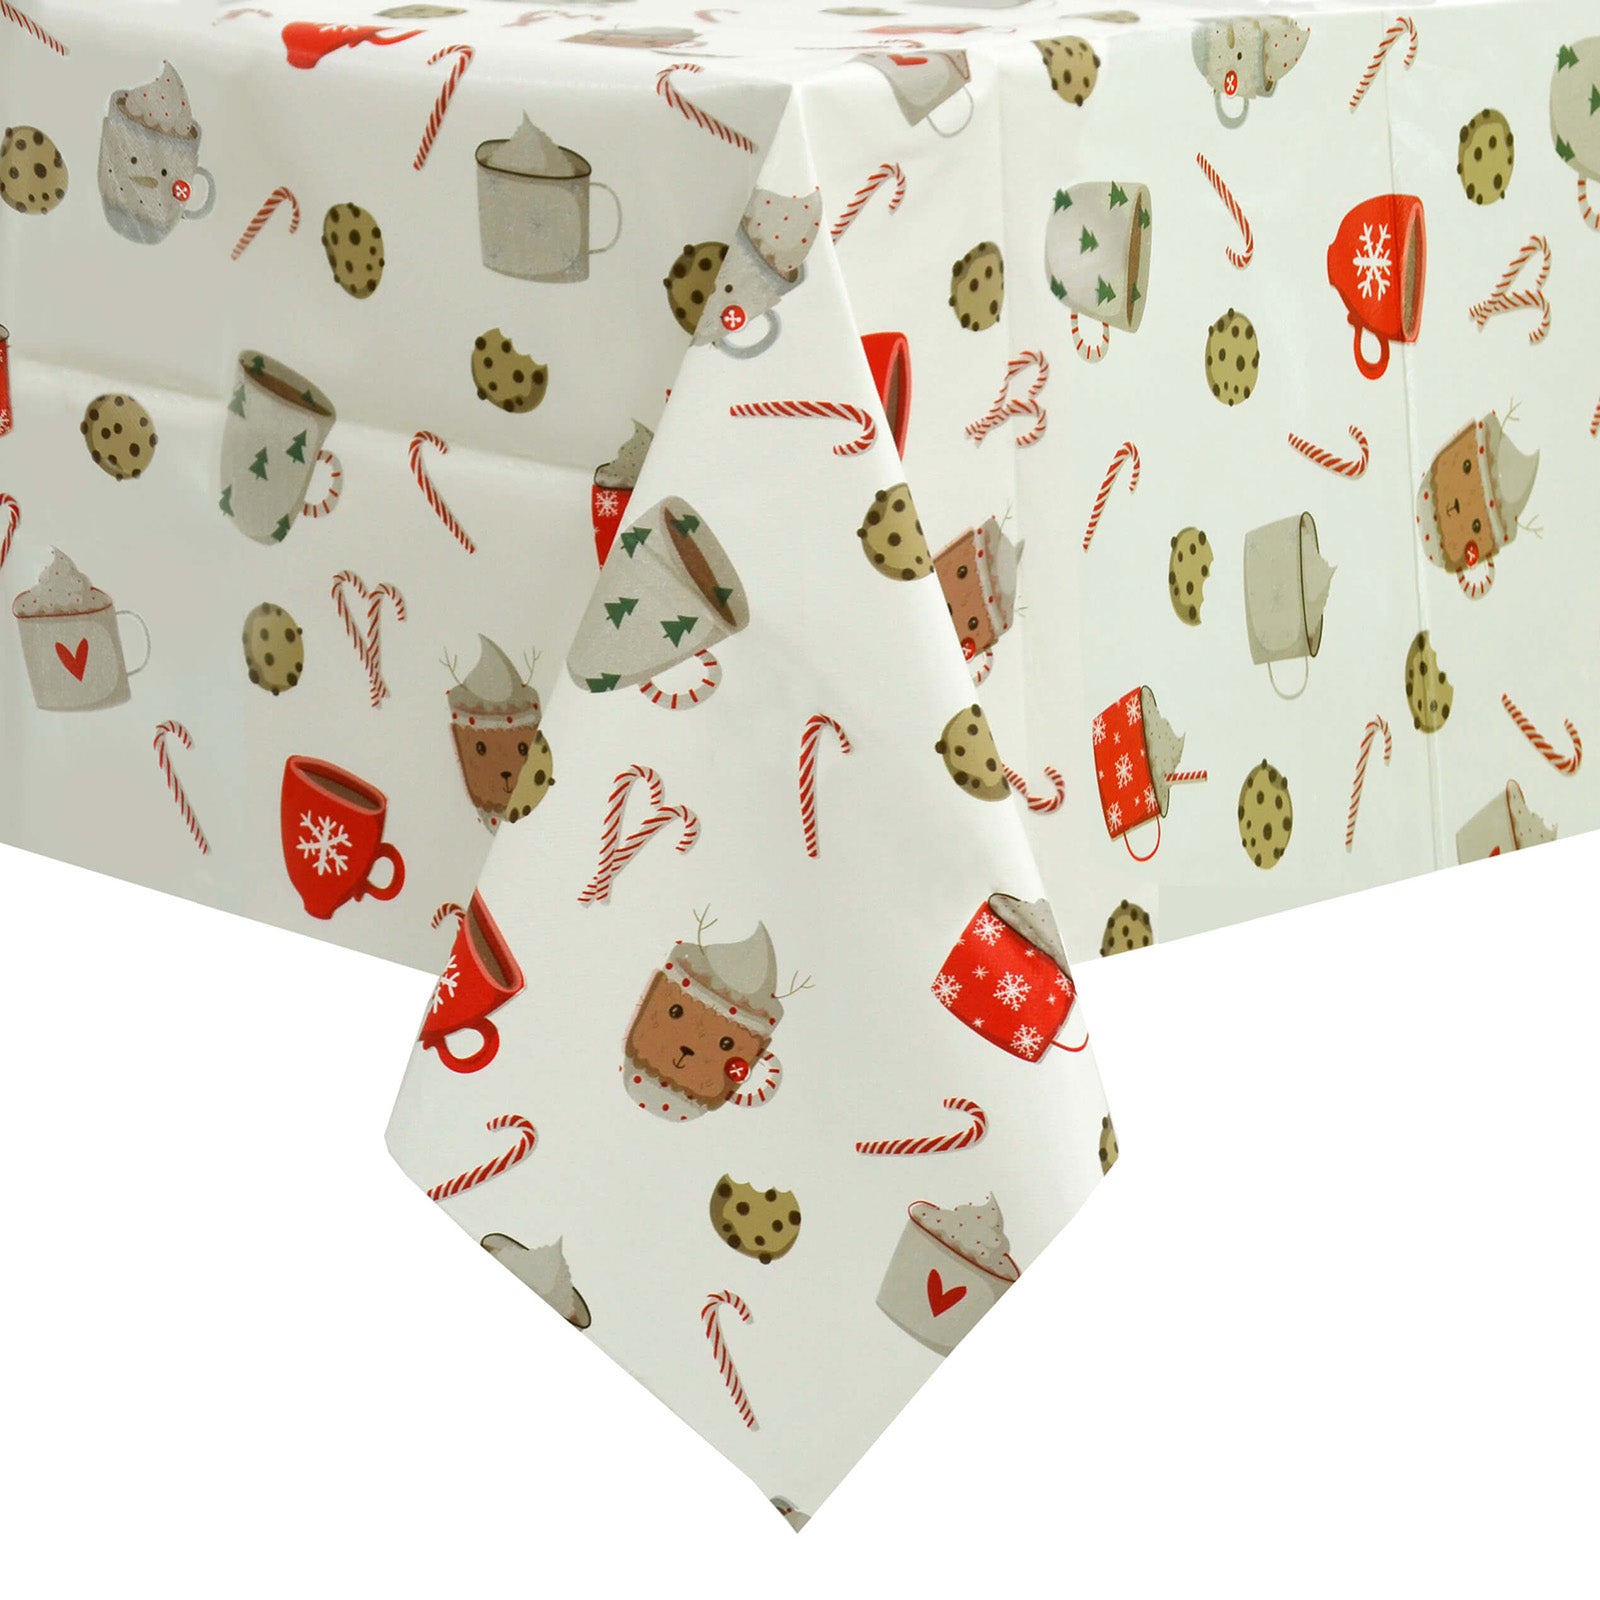 Mr Crimbo PVC Large Christmas Tablecloth Candy Cane - MrCrimbo.co.uk -XS7134 - -christmas tablecloth